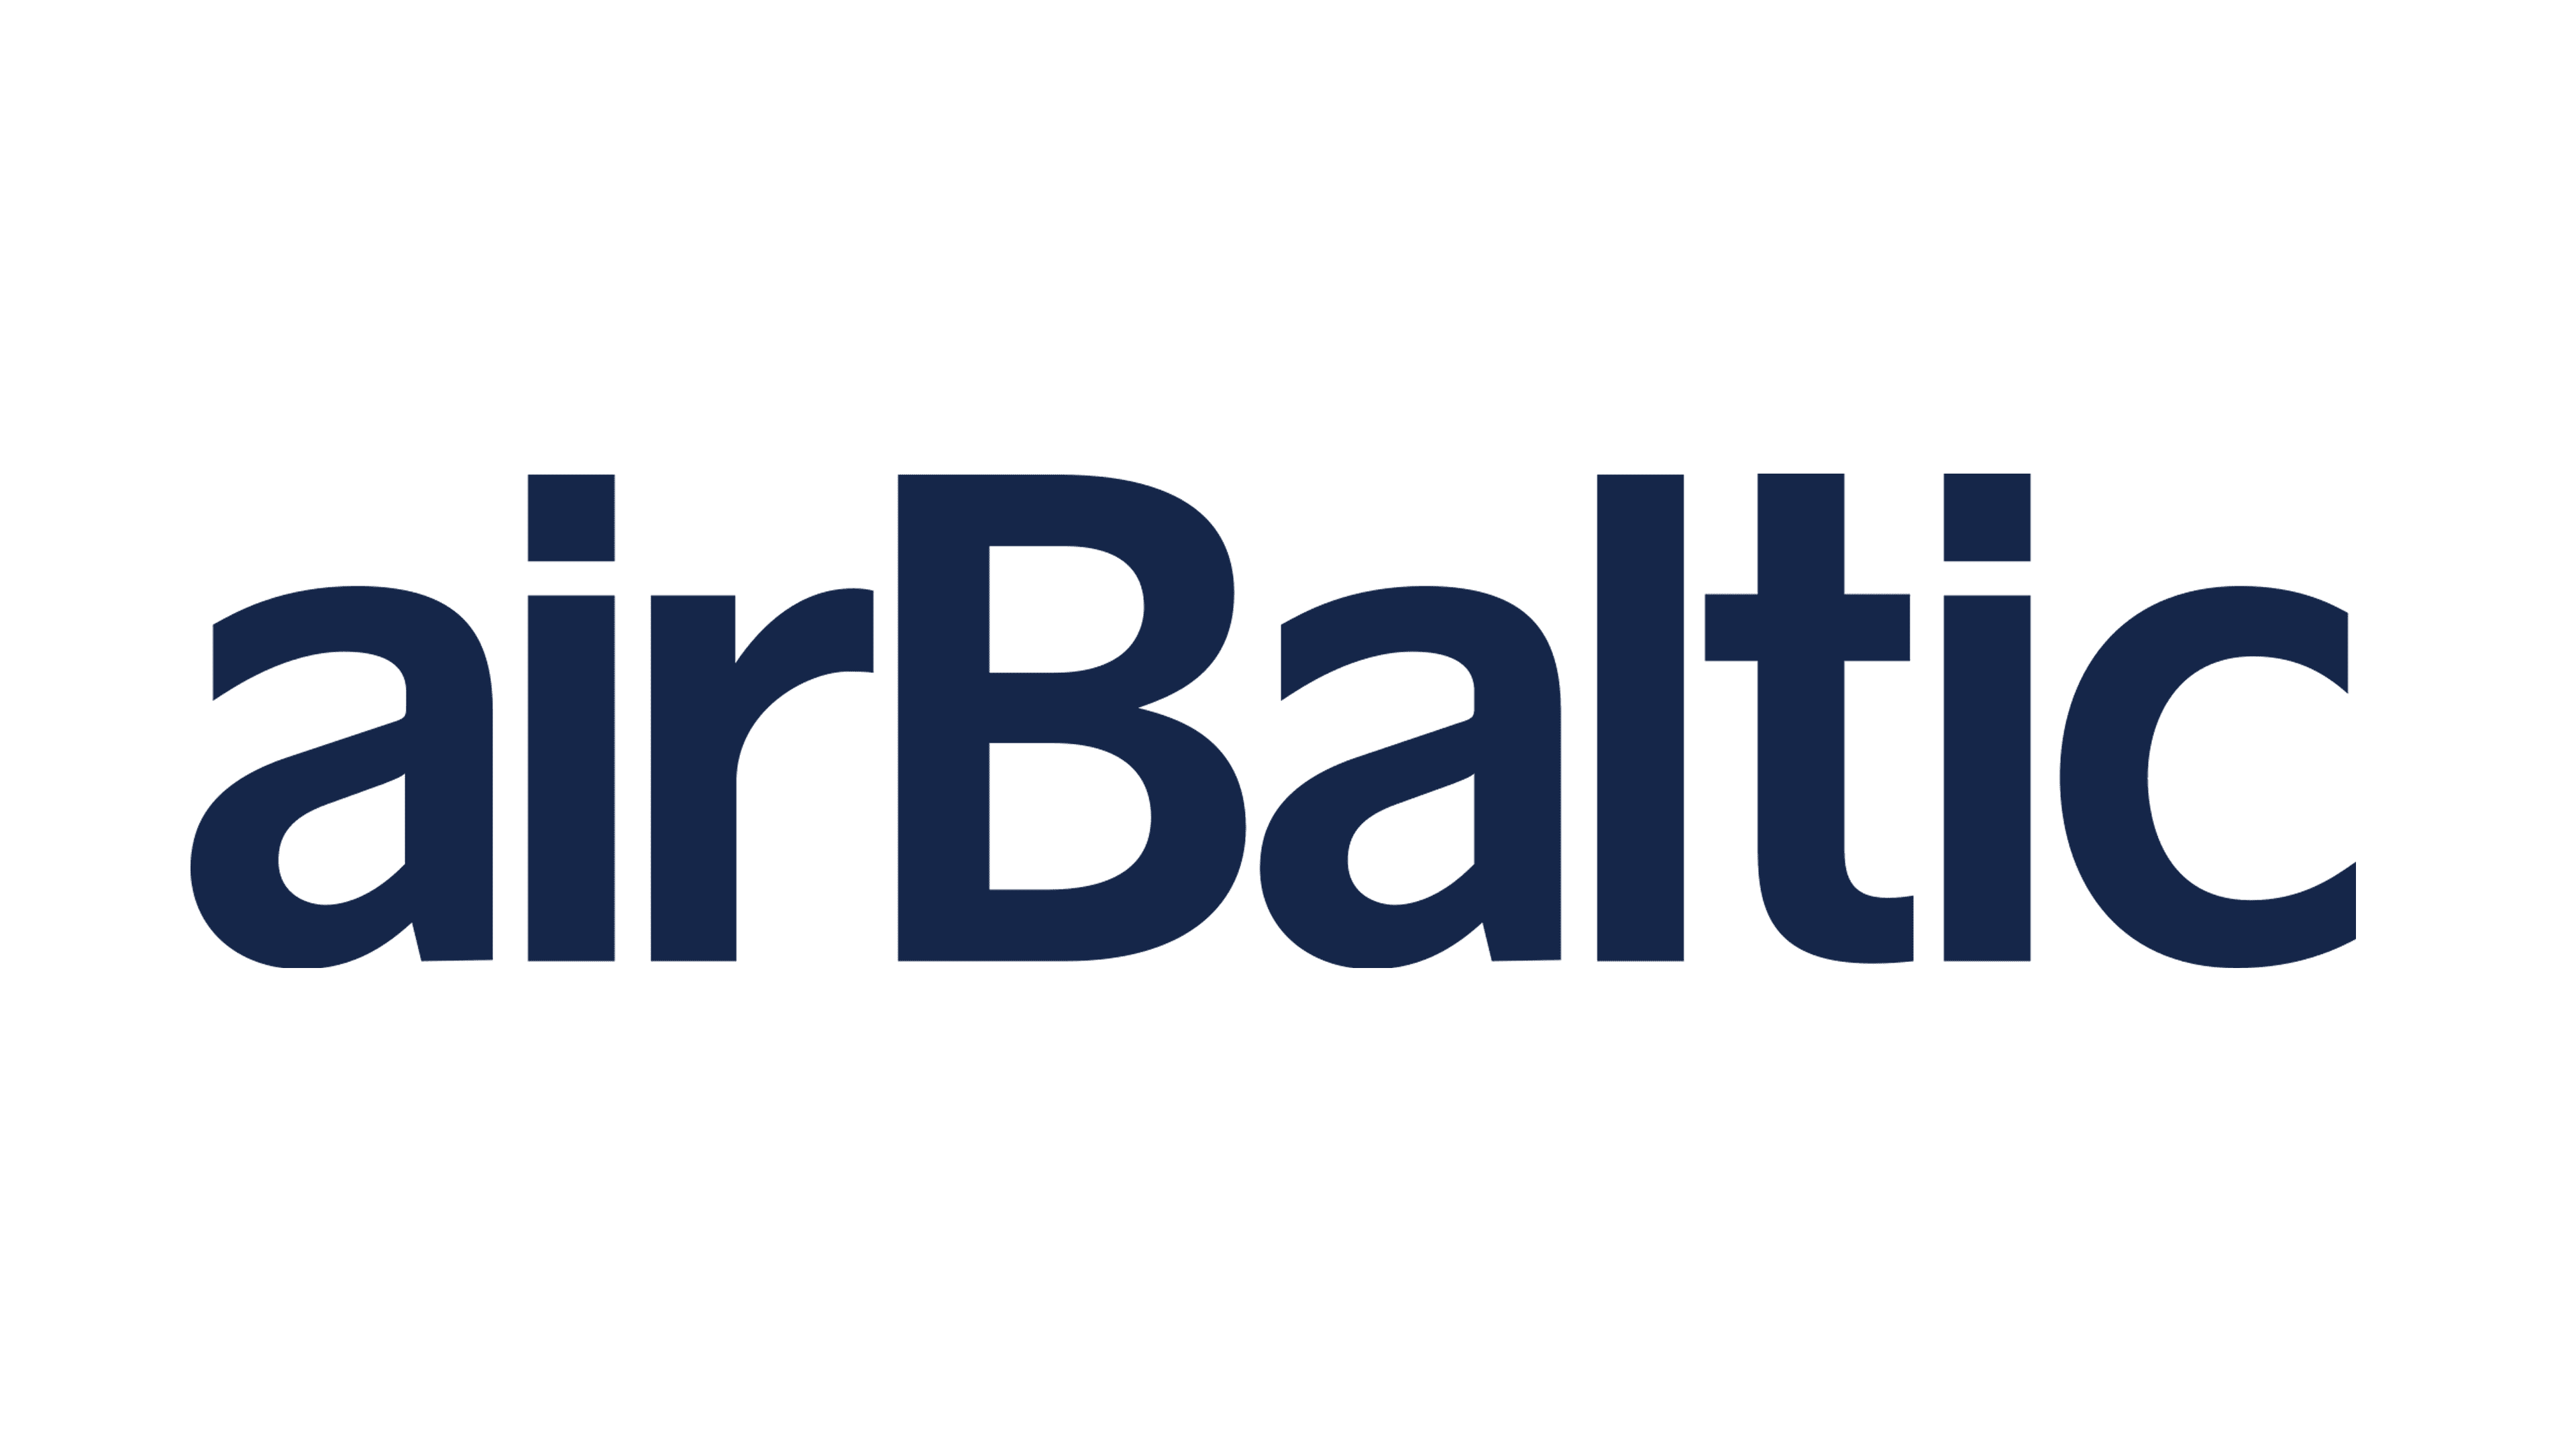 AirBaltic Transparent Logo PNG